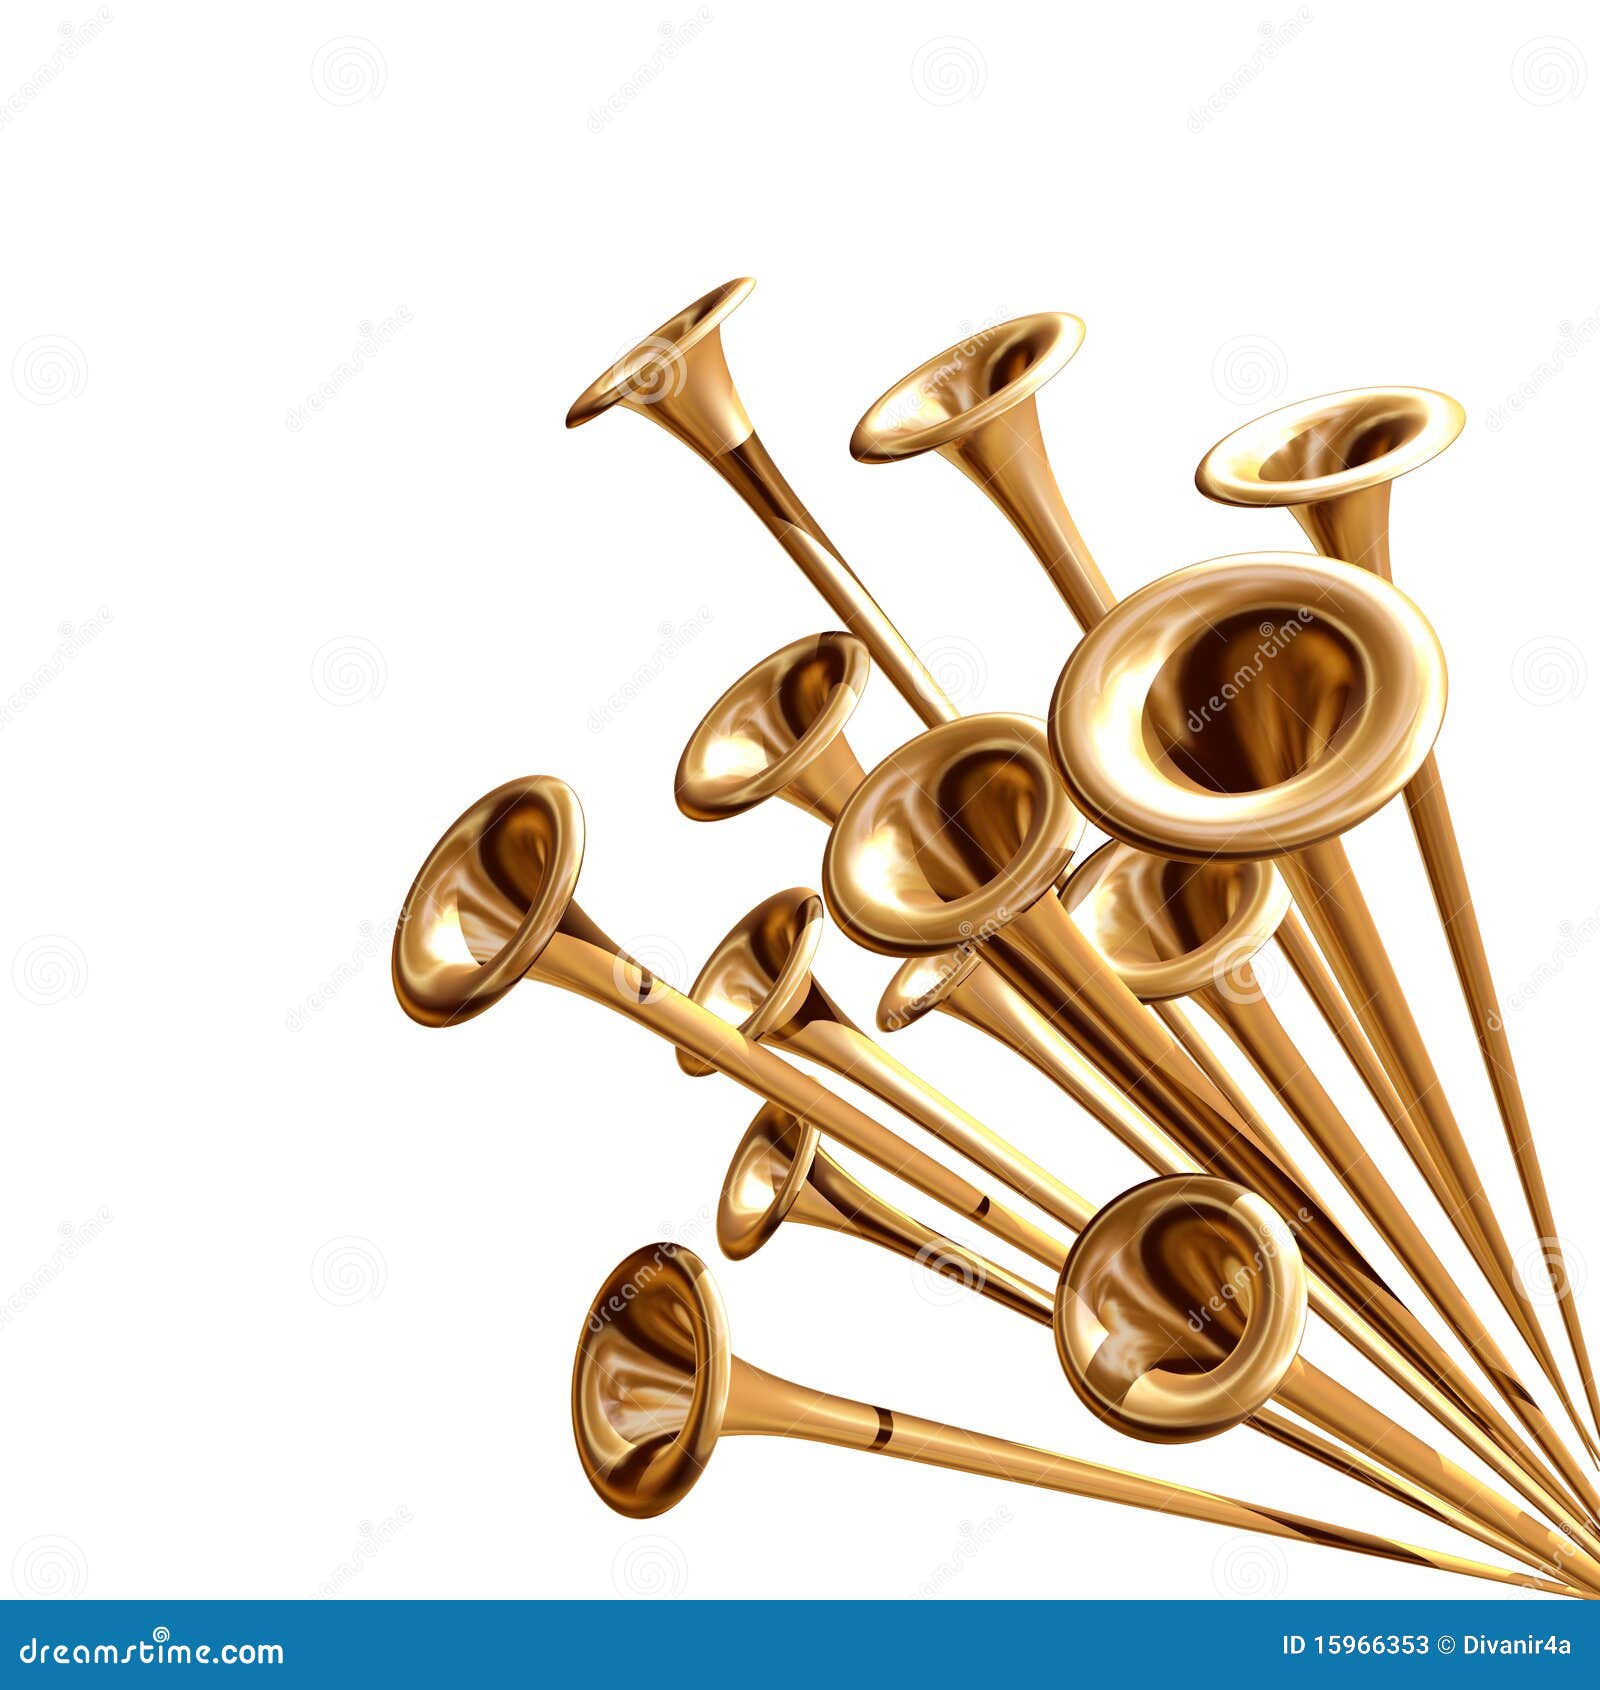 Announcing Trumpets Royalty-Free Stock Photography | CartoonDealer.com ...